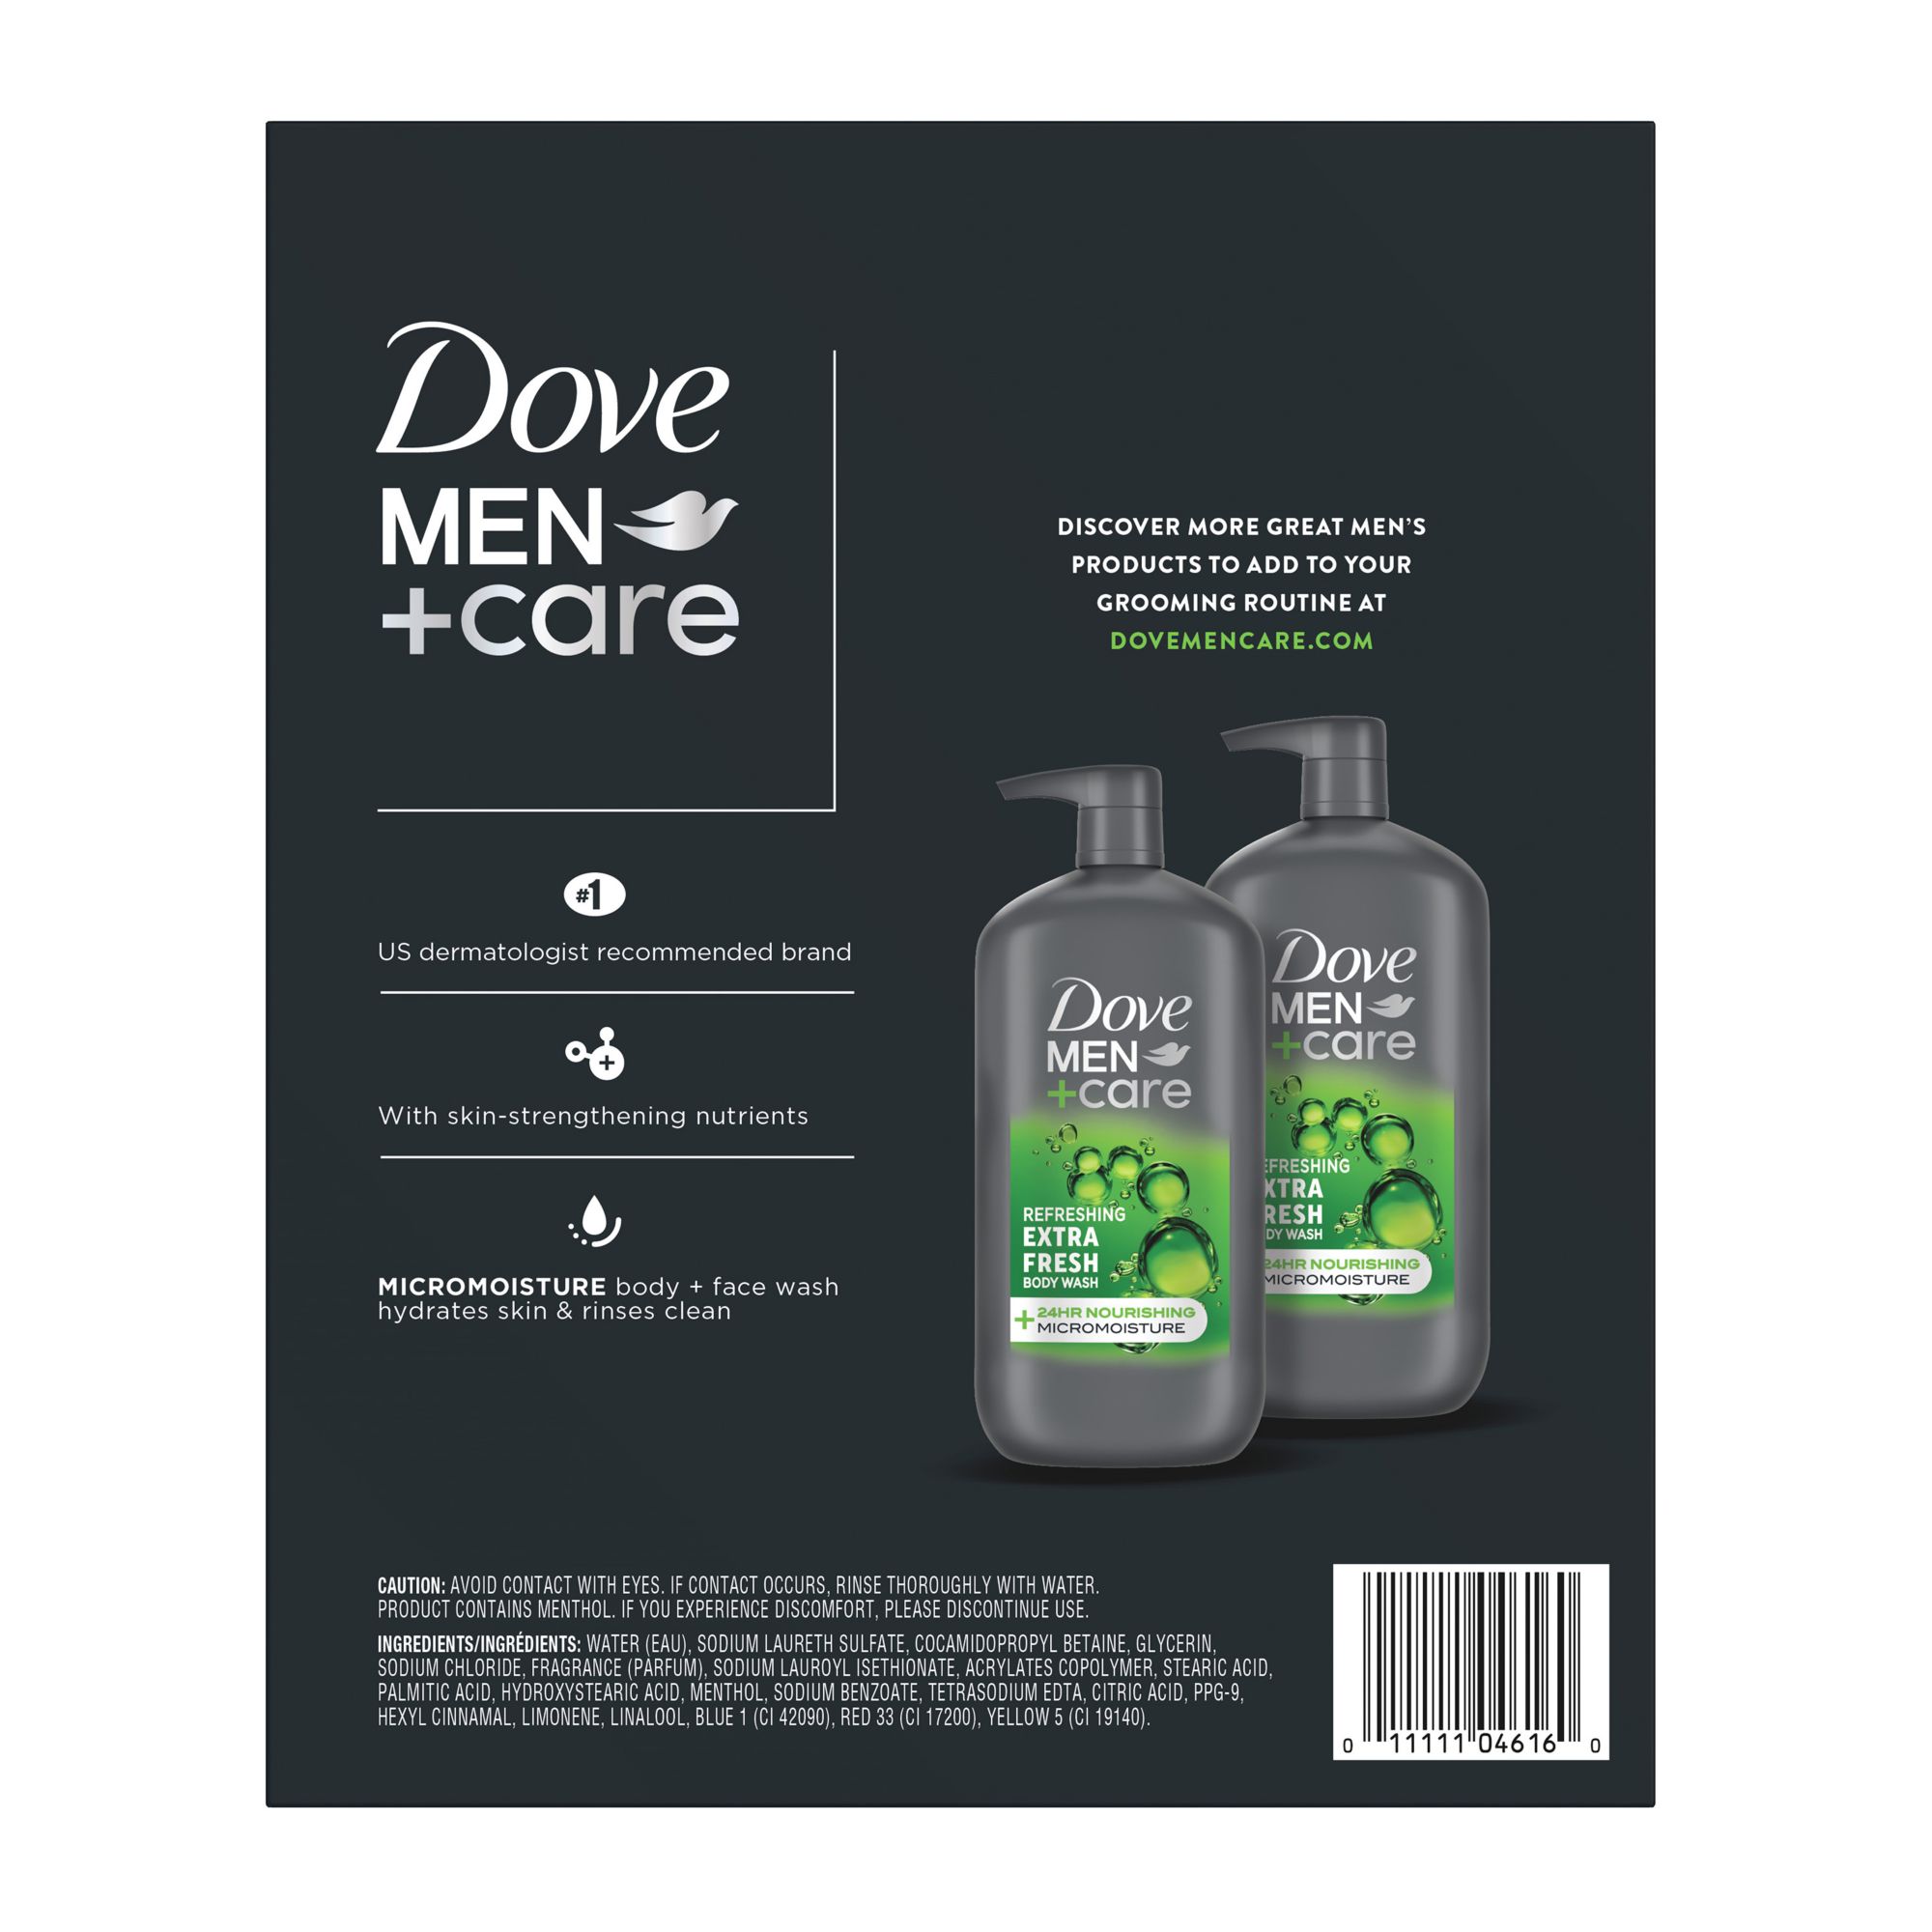 Dove Men Plus Care Extra Fresh Body and Face Bar Case